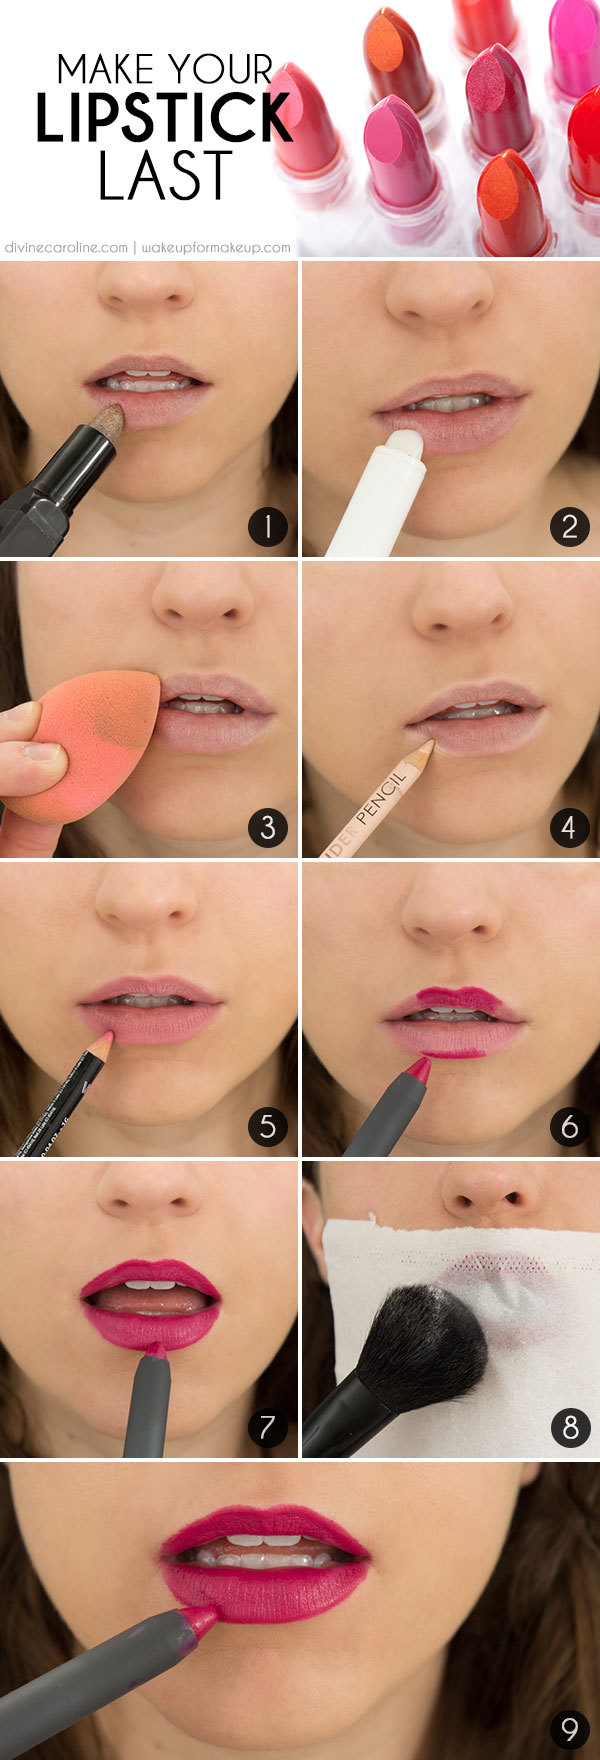 make-your-lipstick-last_84641